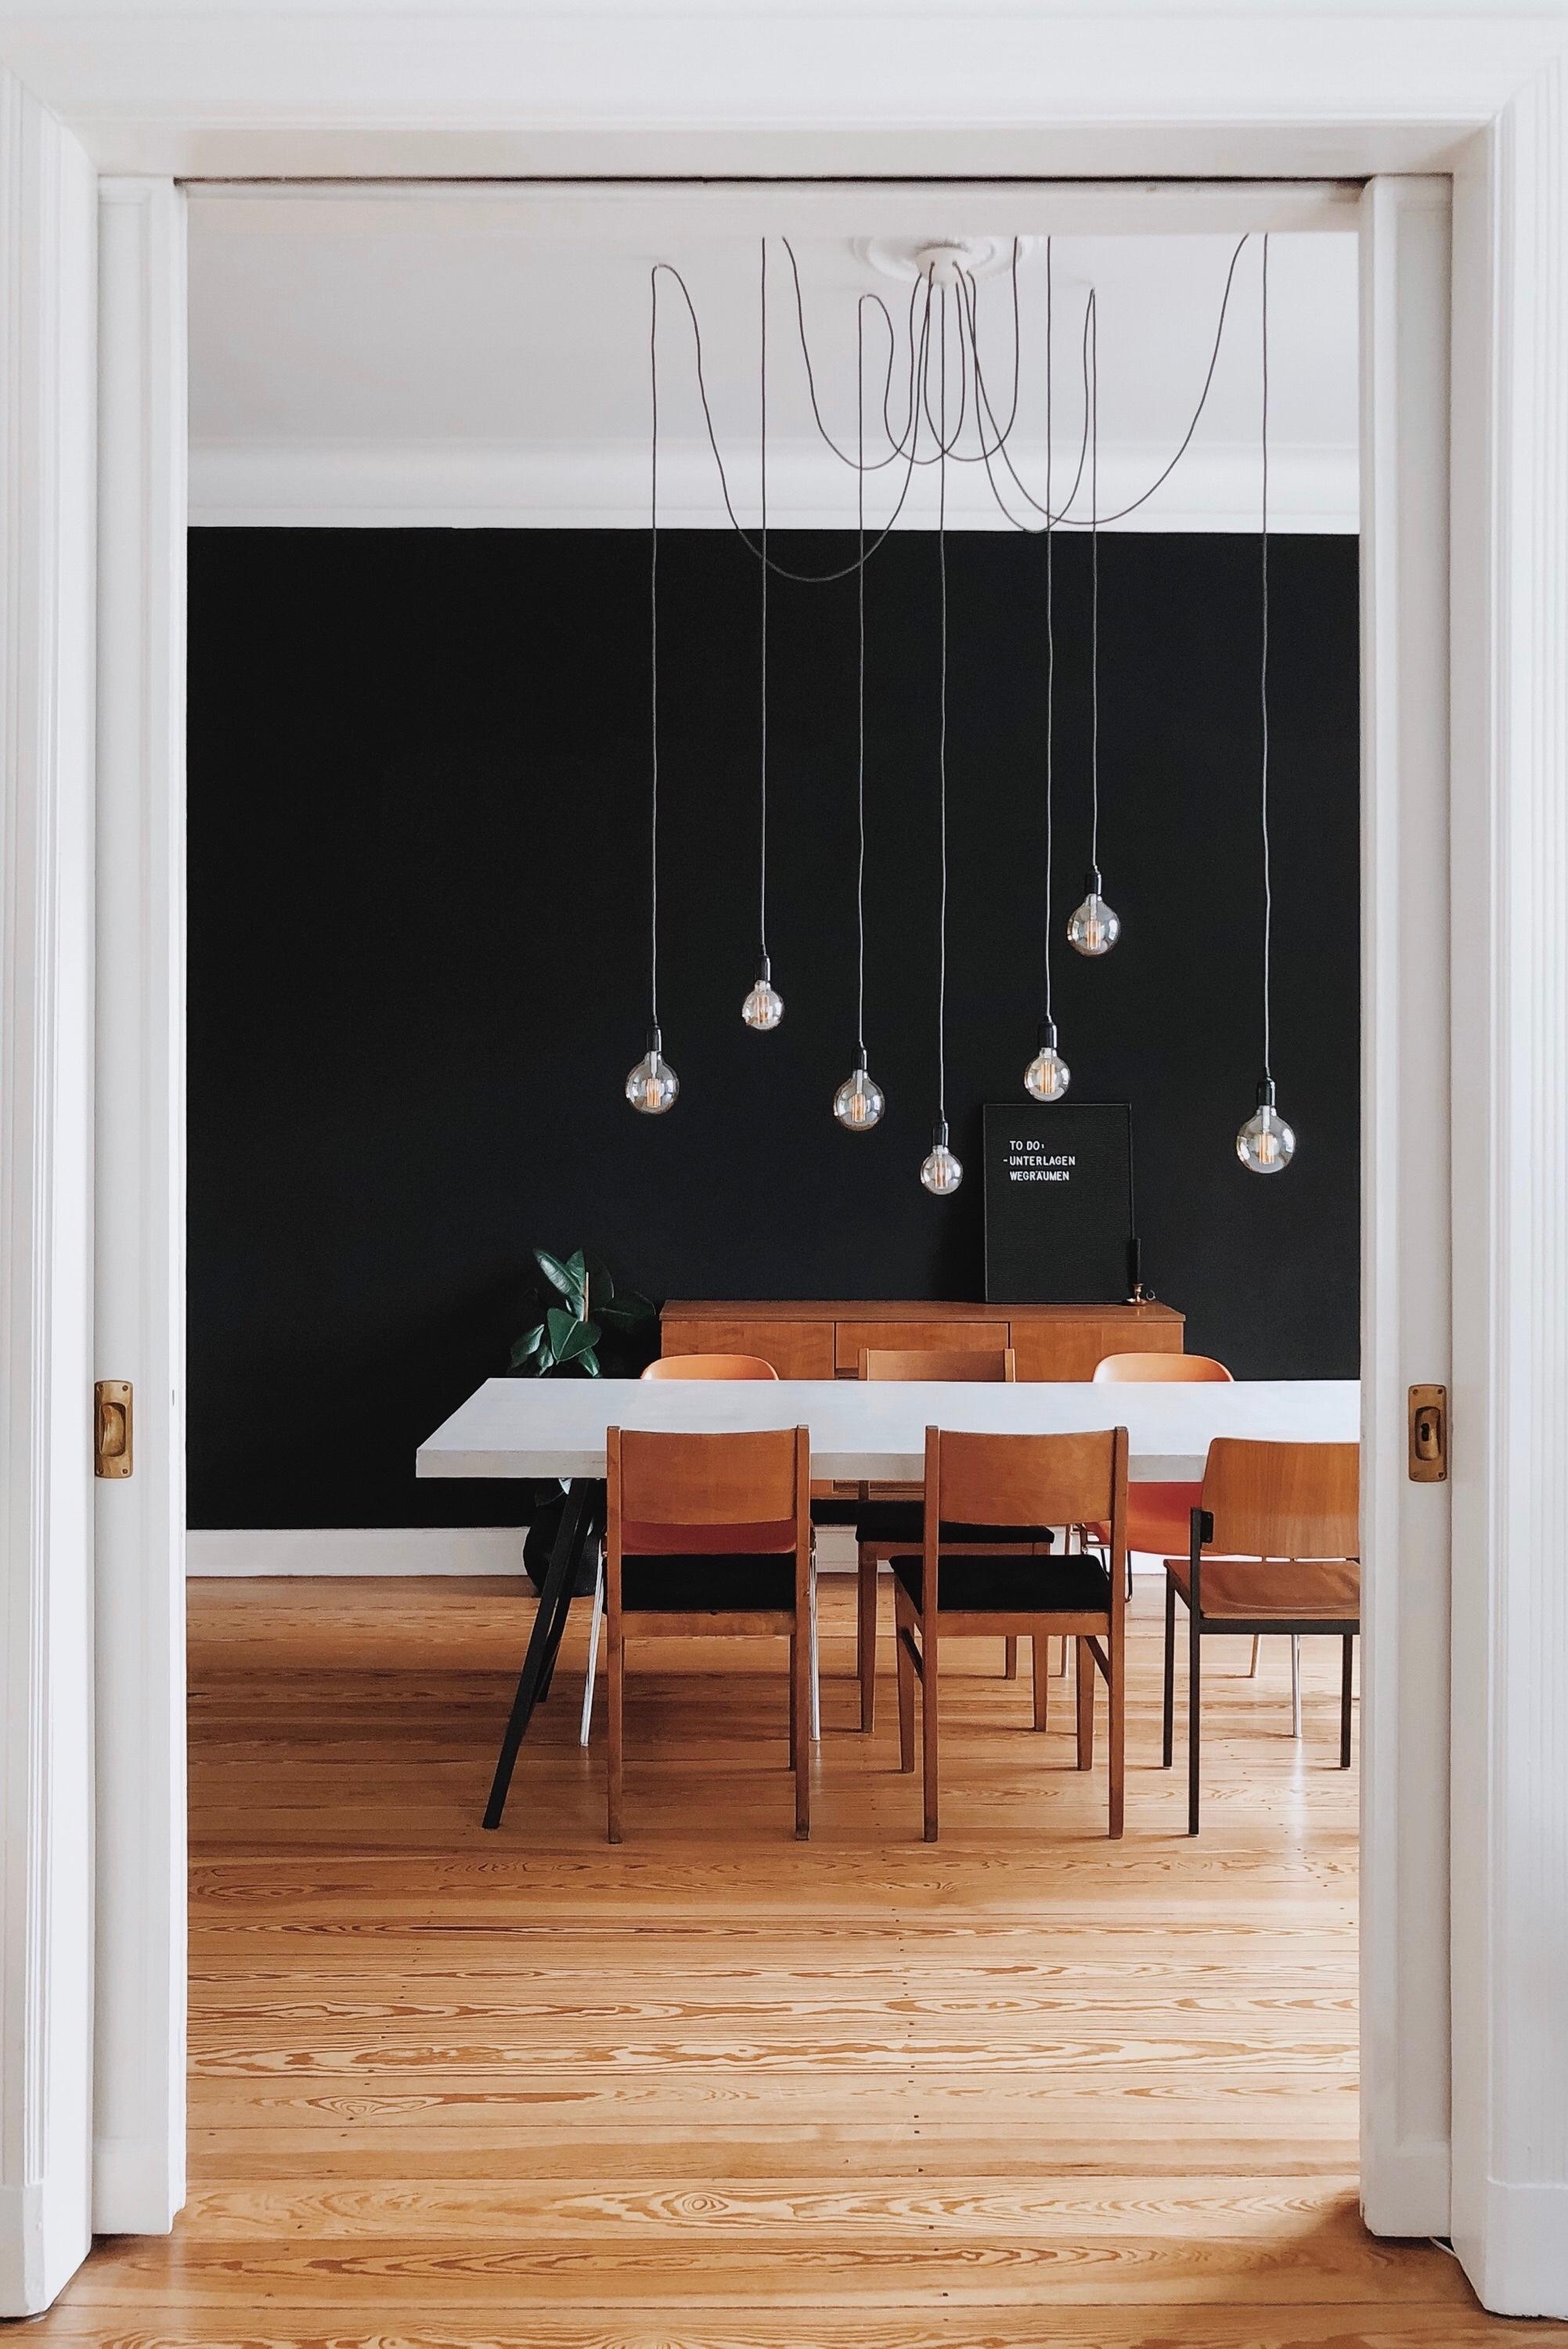 DIY-Lampe & DIY-Betontisch. #diy #diningroom #altbau #interior #wandfarbe #couchstyle